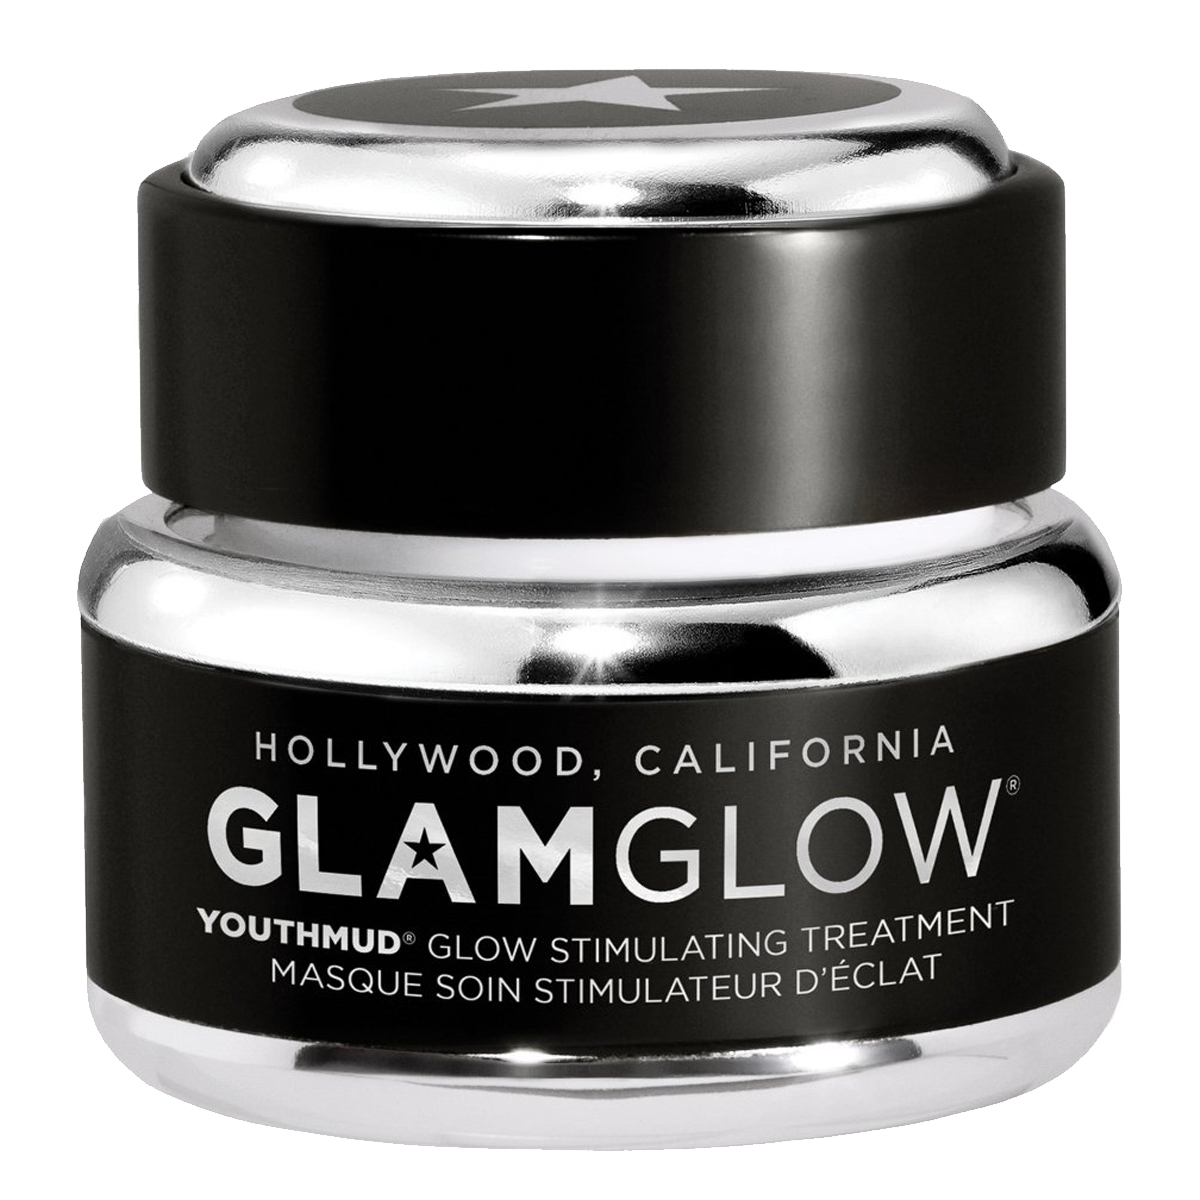 ماسک گلی جوانساز~Youth Mud Glow Stimulating Treatment Mask~GLAM GLOW